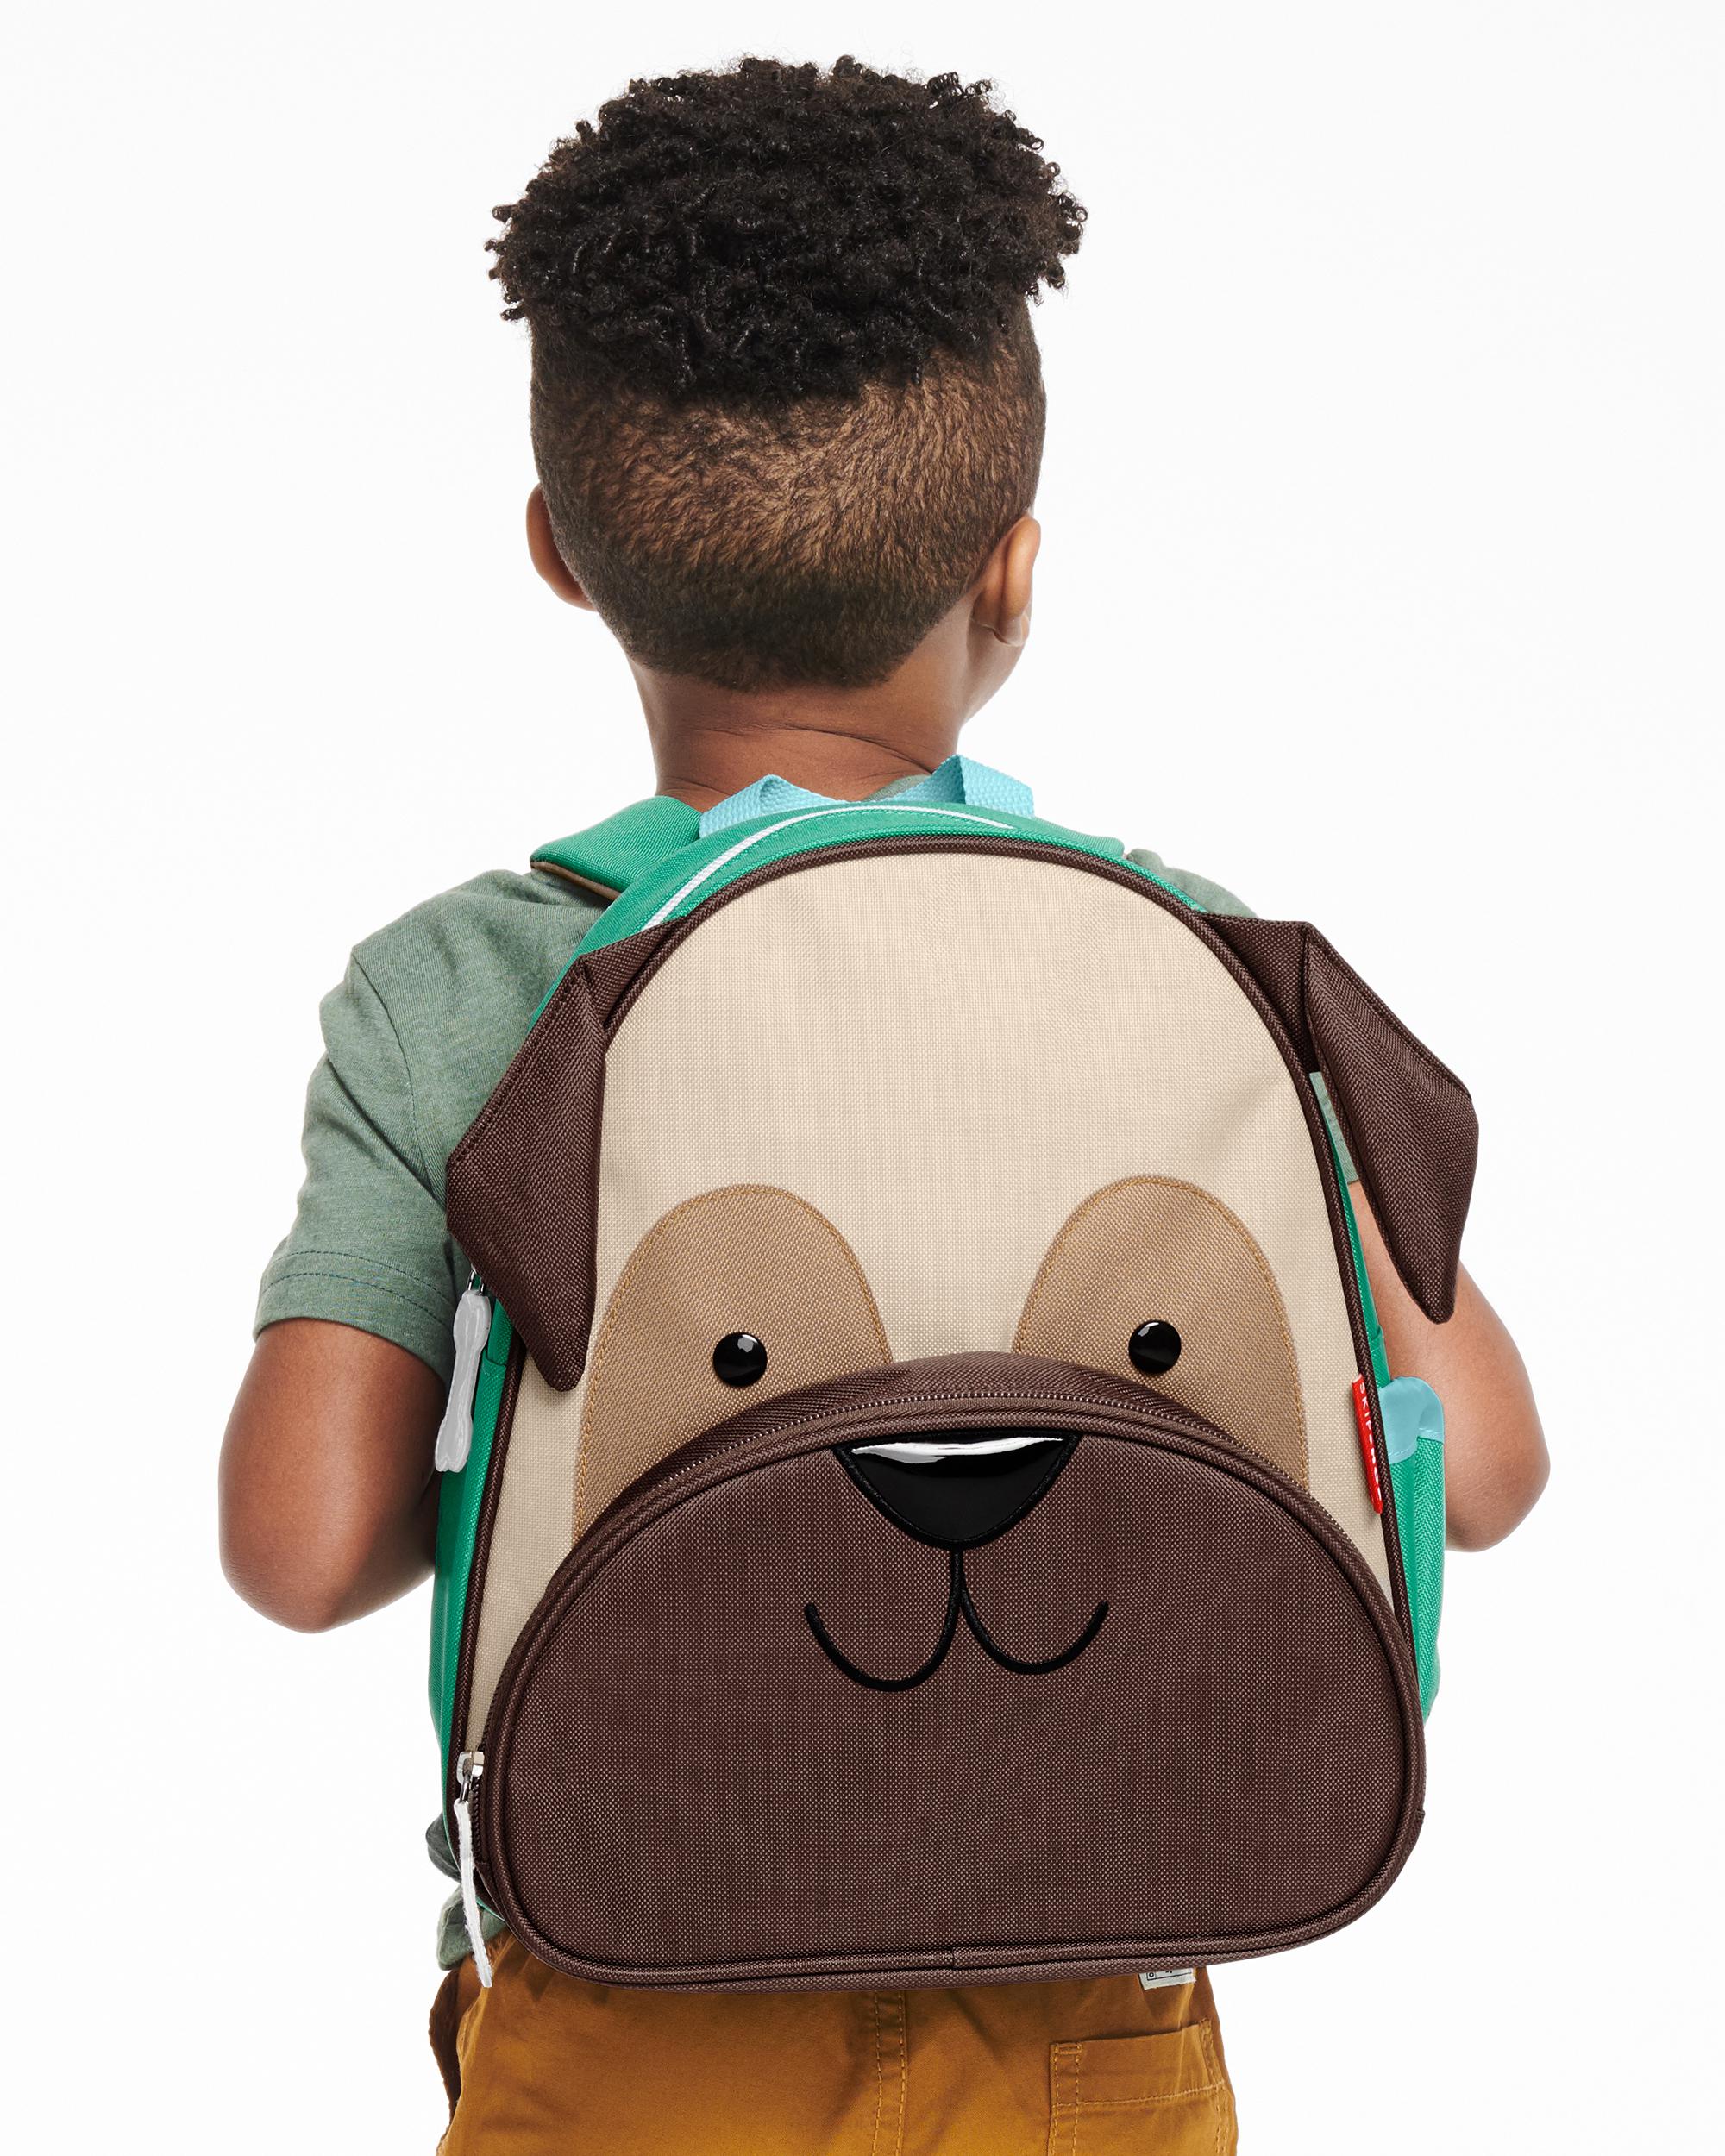 Zoo Little Kid Backpack - Pug